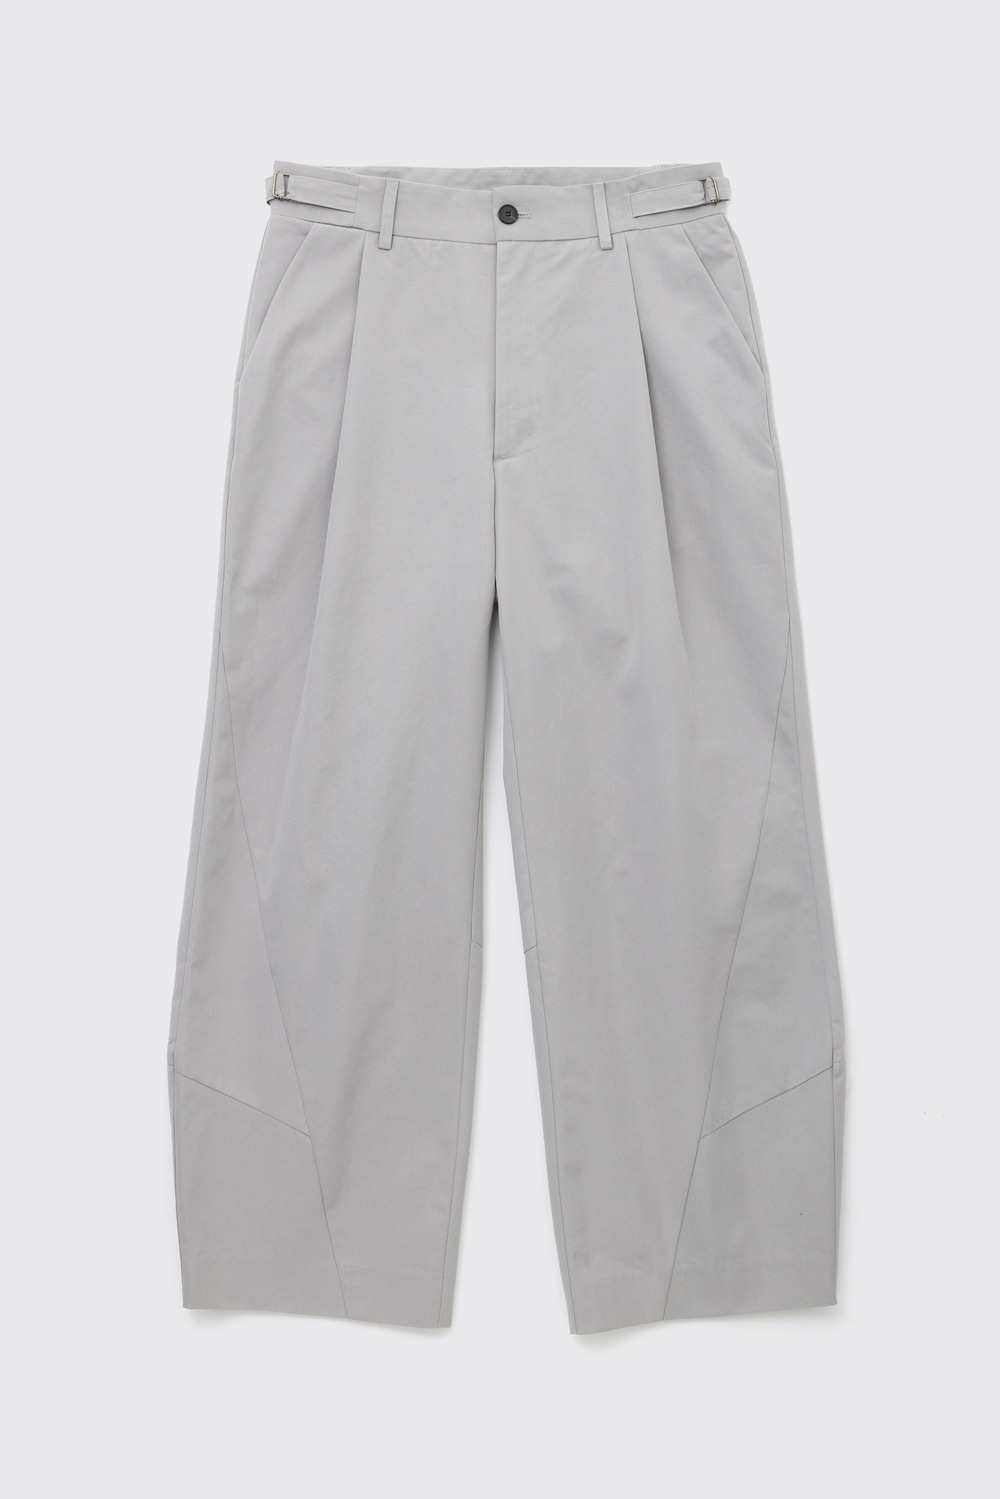 [soui. Exclusive] Triangle Trousers Silver (Restock)